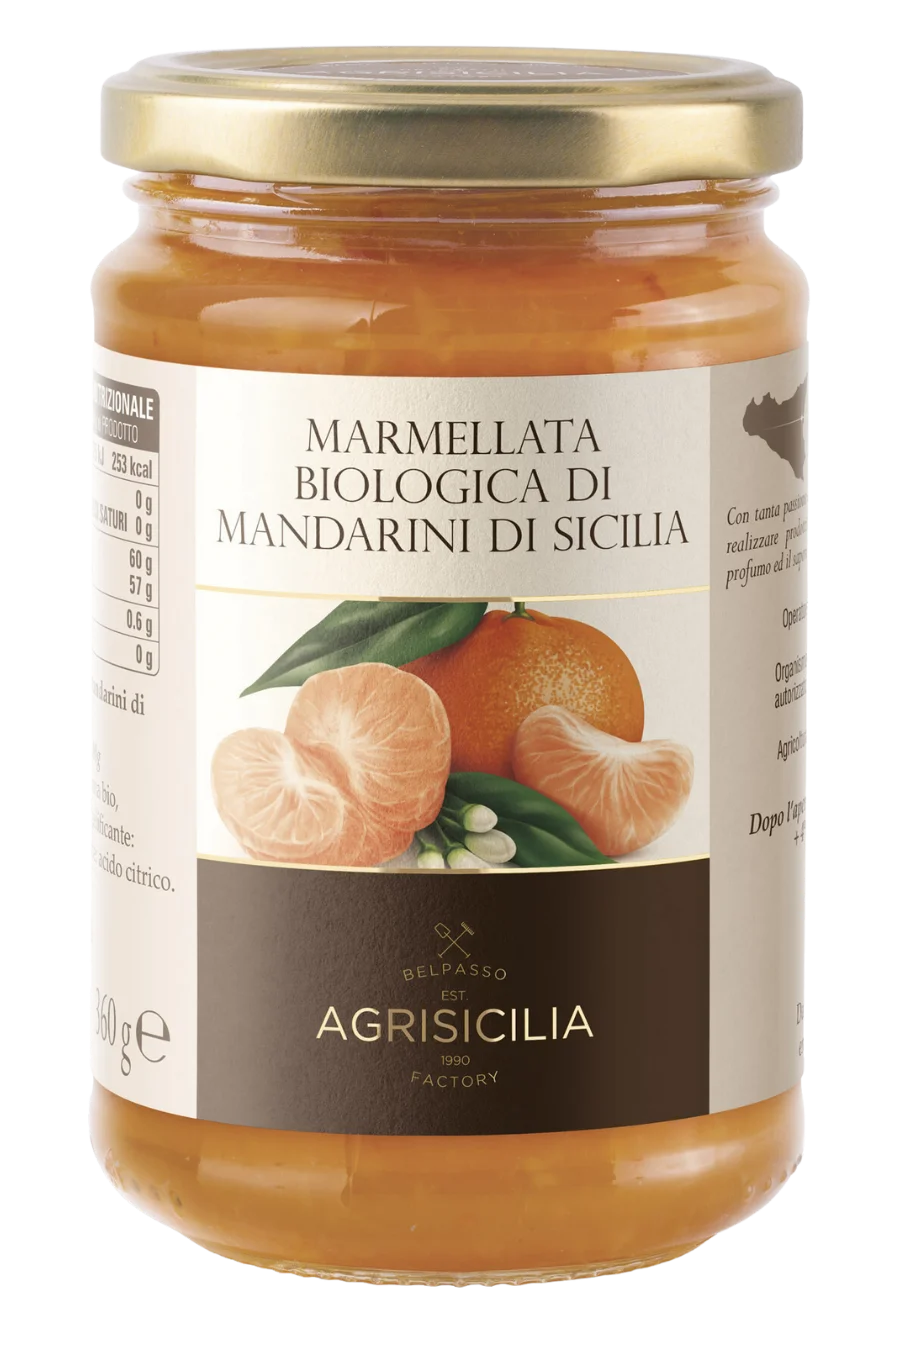 Marmellata Biologica di Mandarini di Sicilia